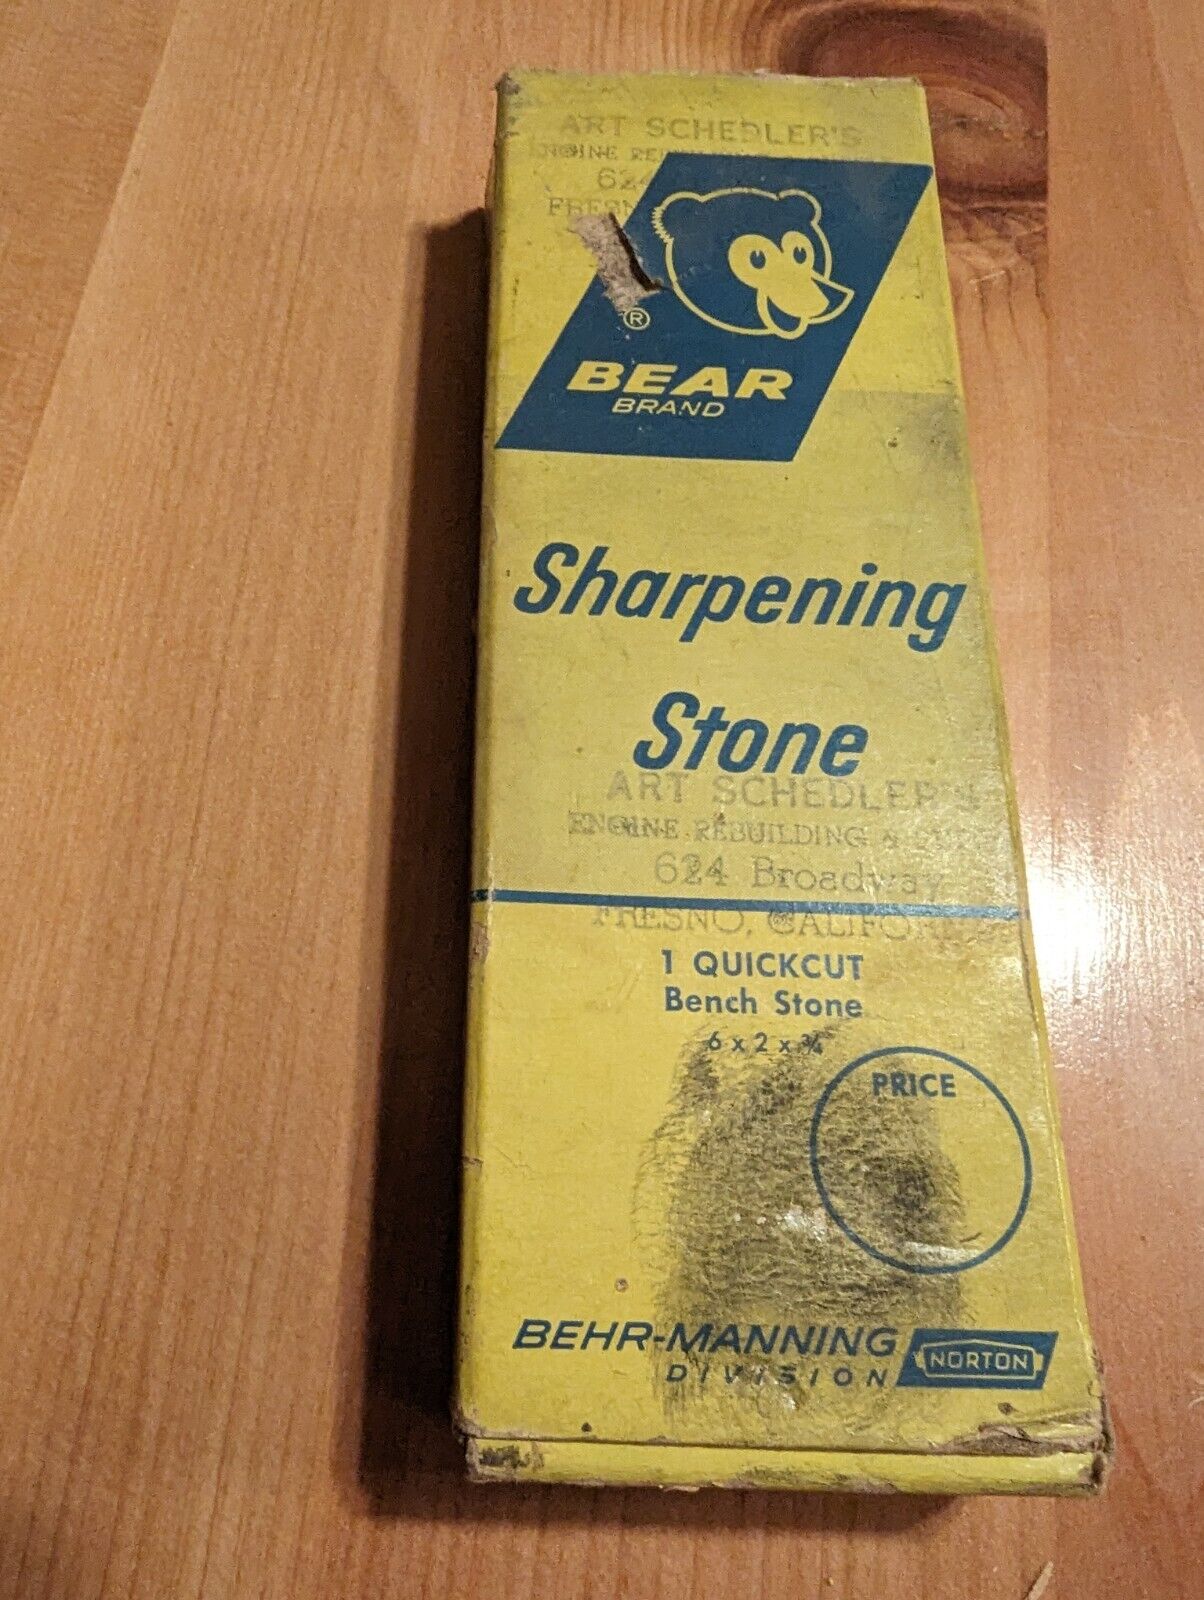 Vintage UPB6 Behr-Manning Norton Bear Brand Sharping Stone quick cut 6x2x3/4\